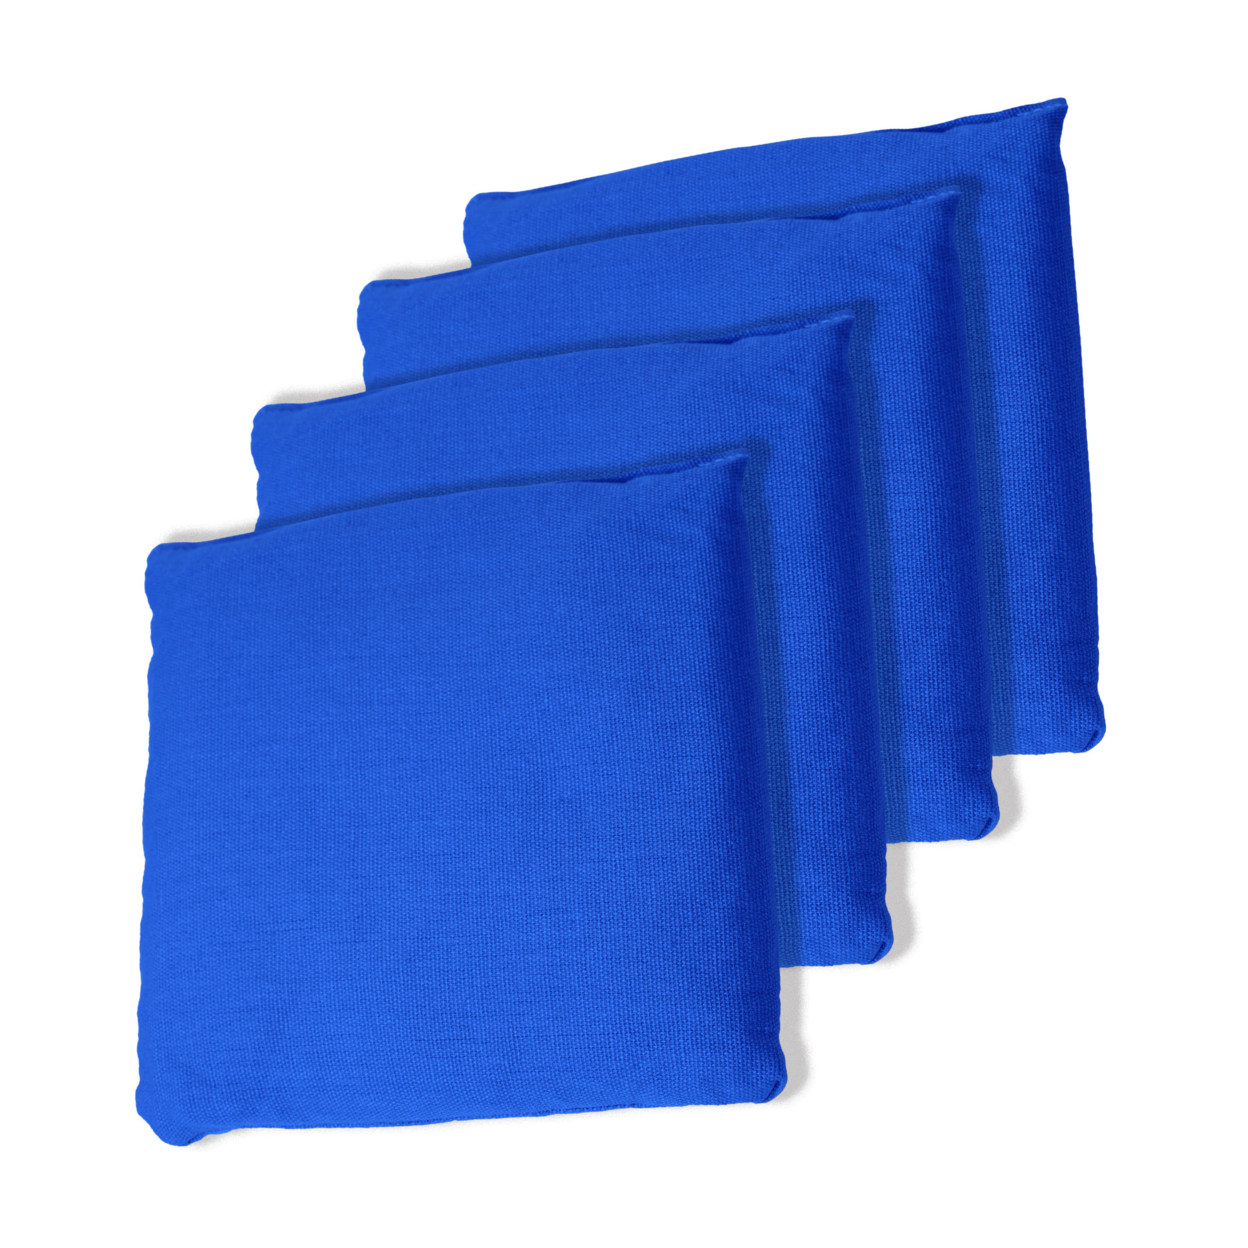 Black And Blue Cornhole Bags, Set Of 8